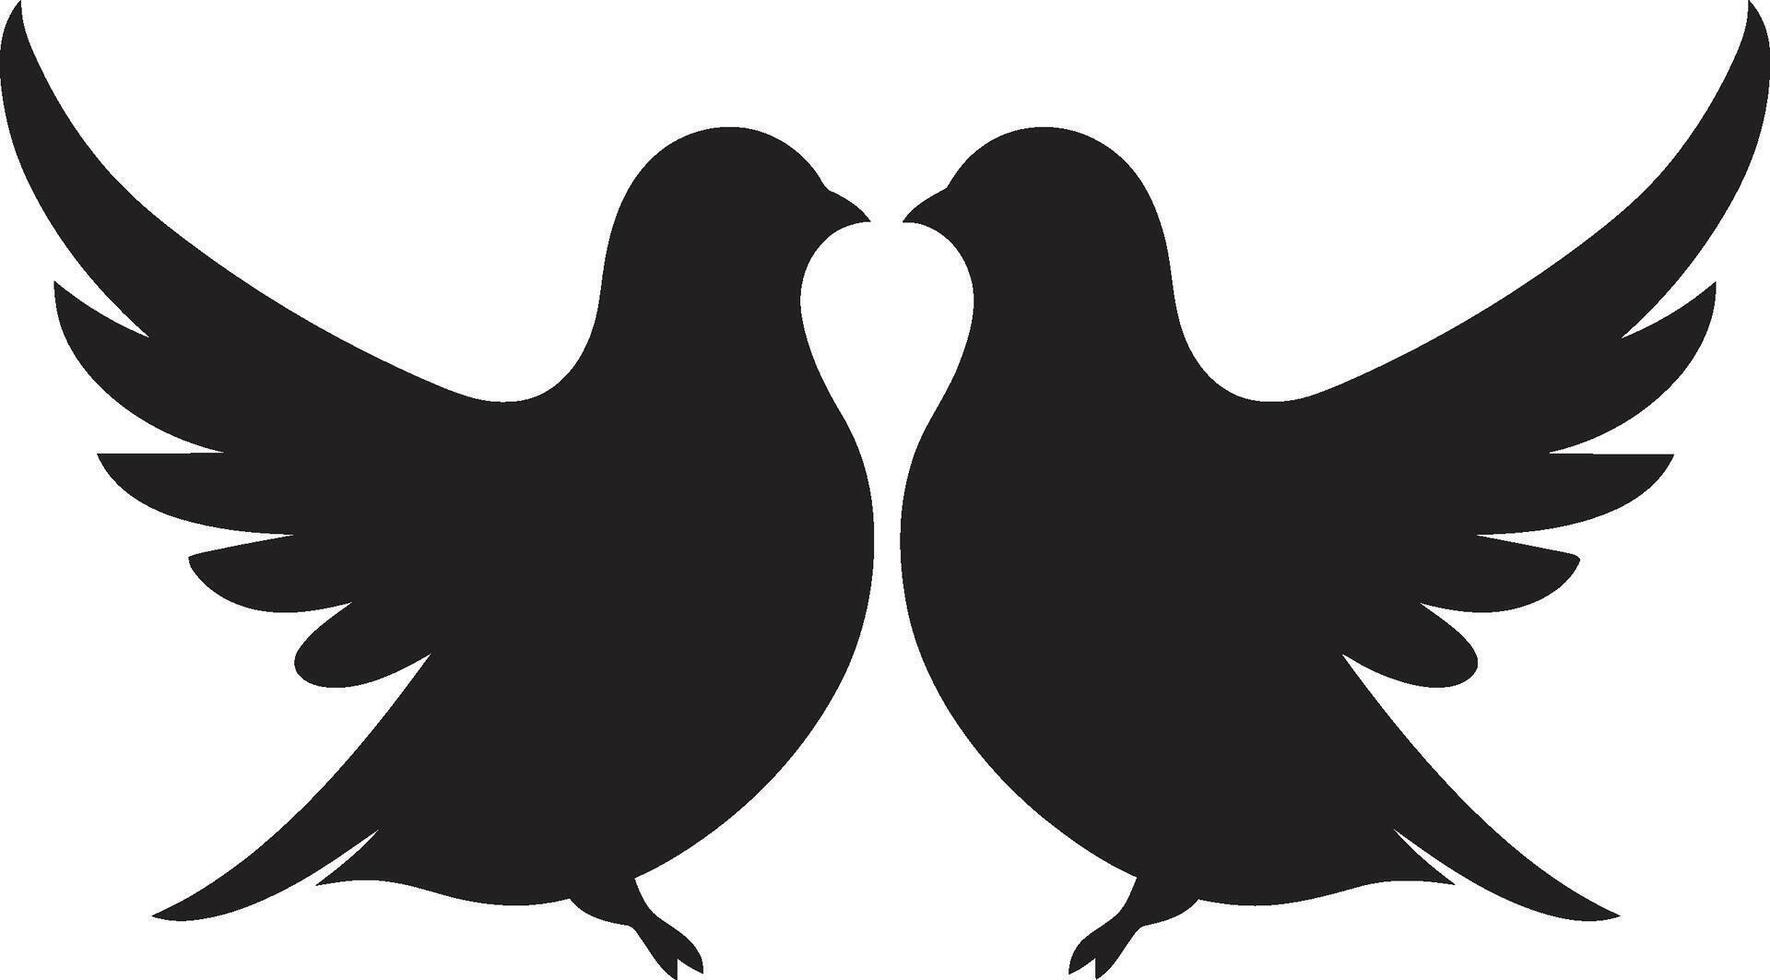 Eternal Harmony Dove Pair Emblem Celestial Lovebirds of a Dove Pair vector